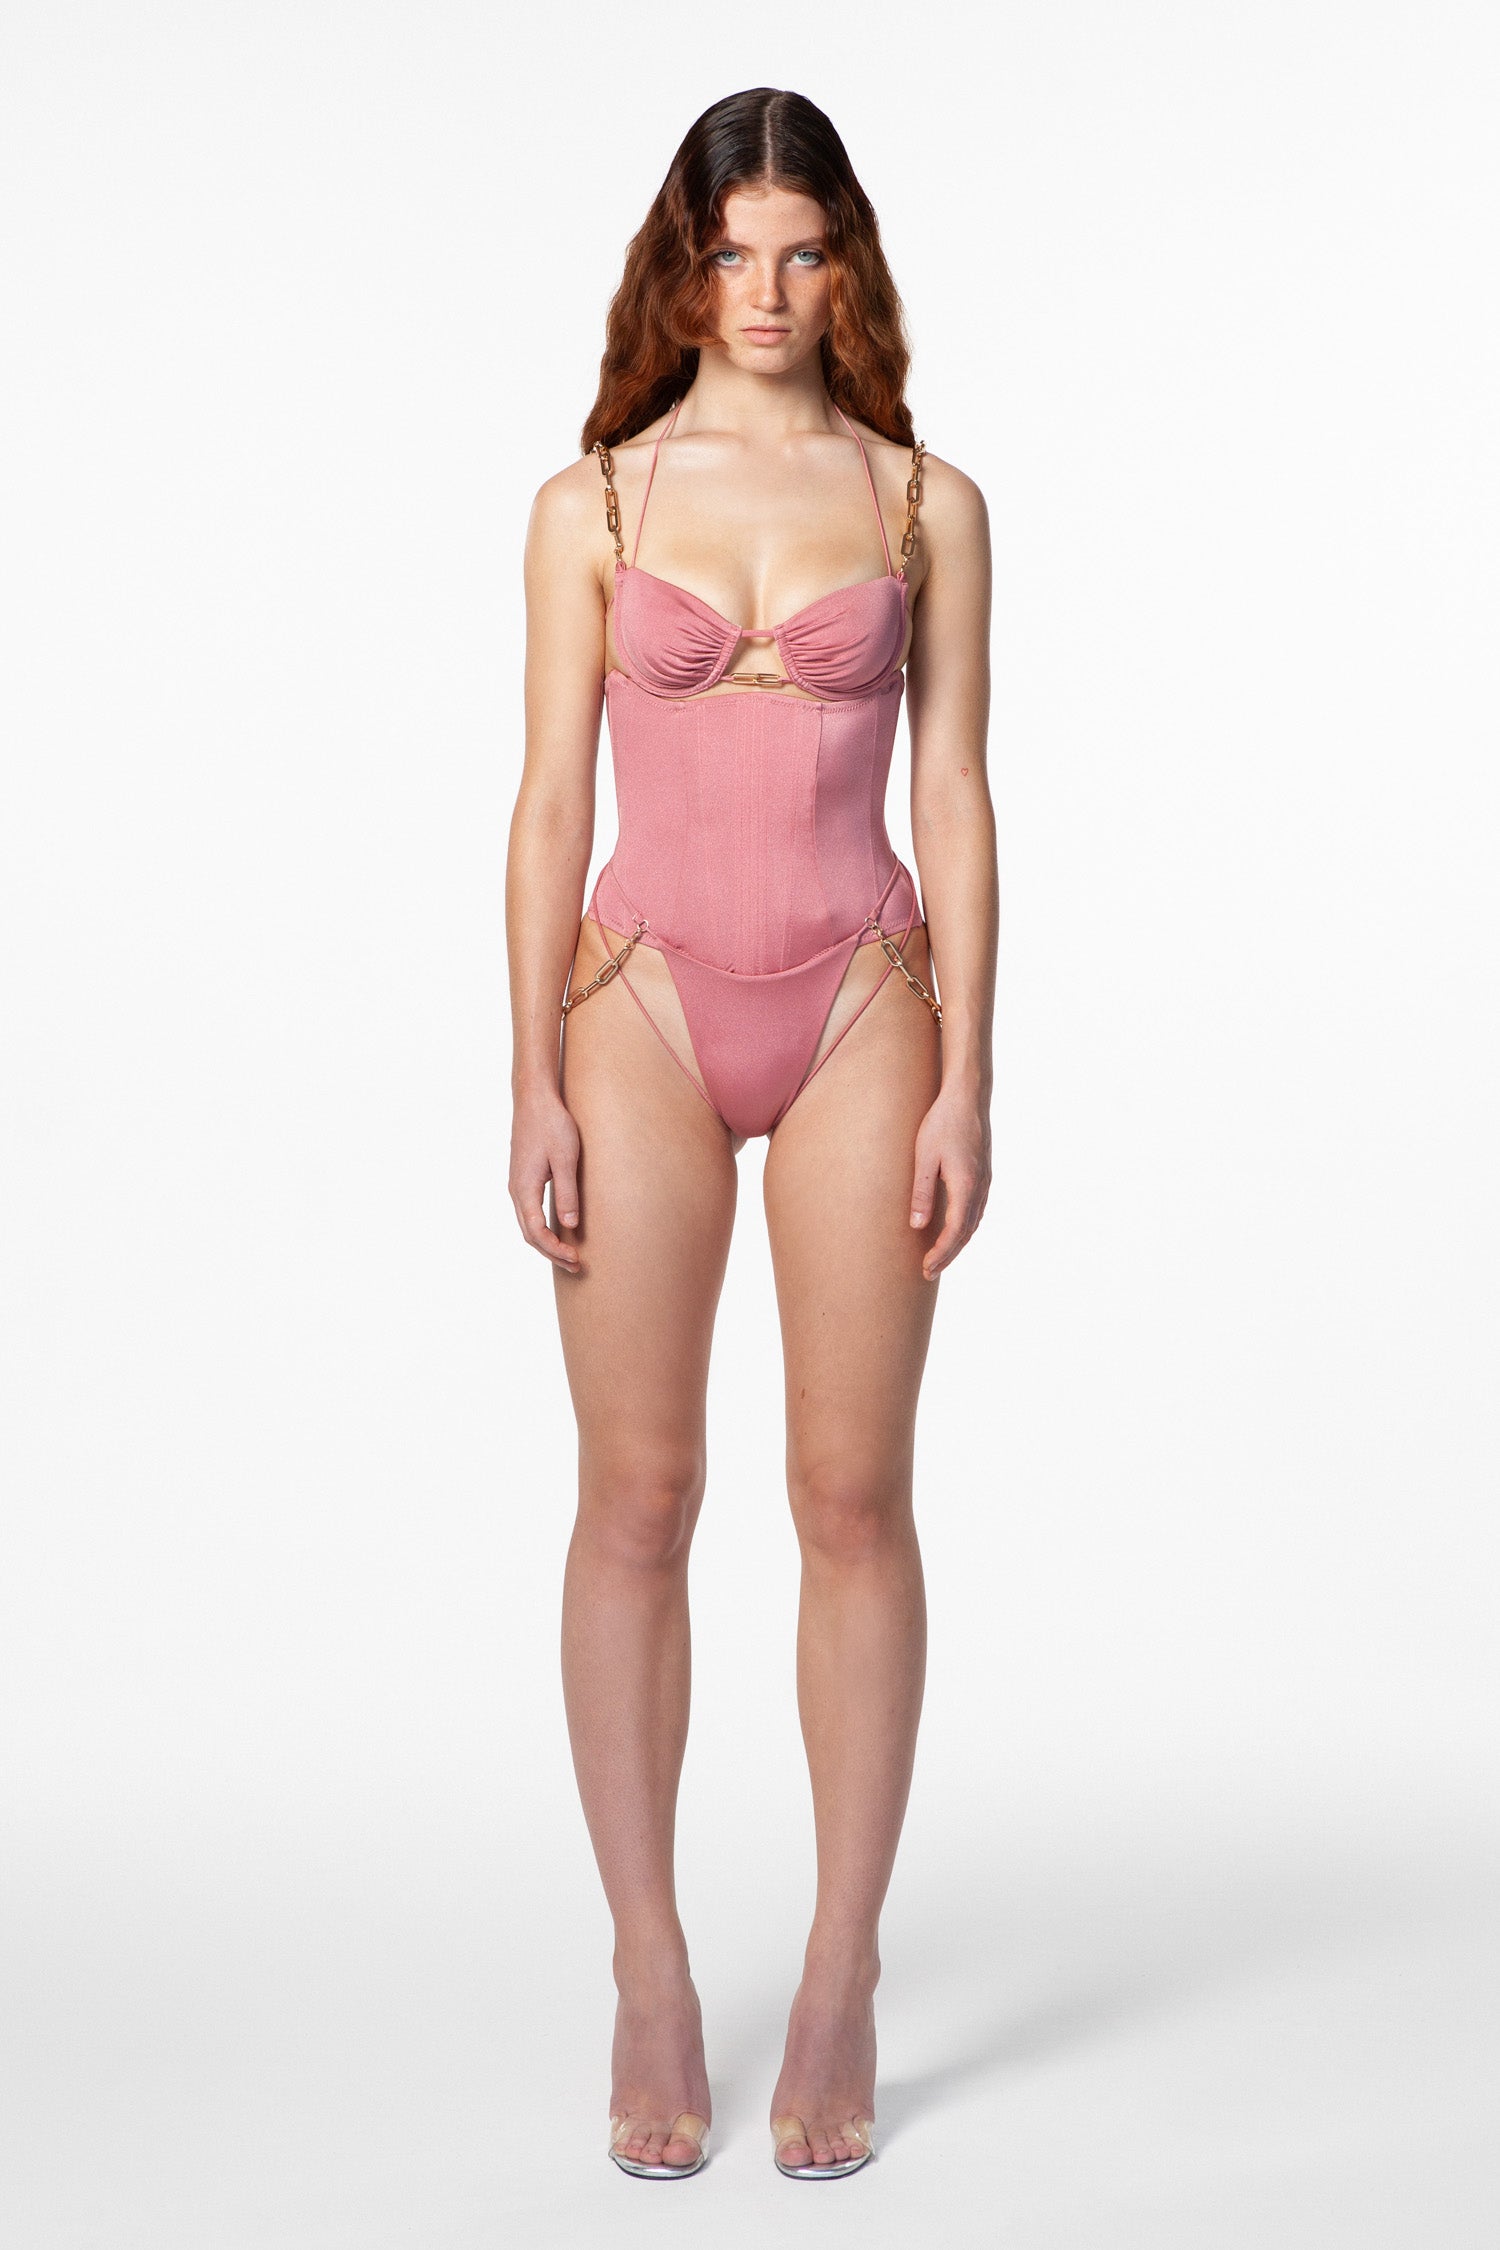 Belly Dancer Bikini Top - Pink